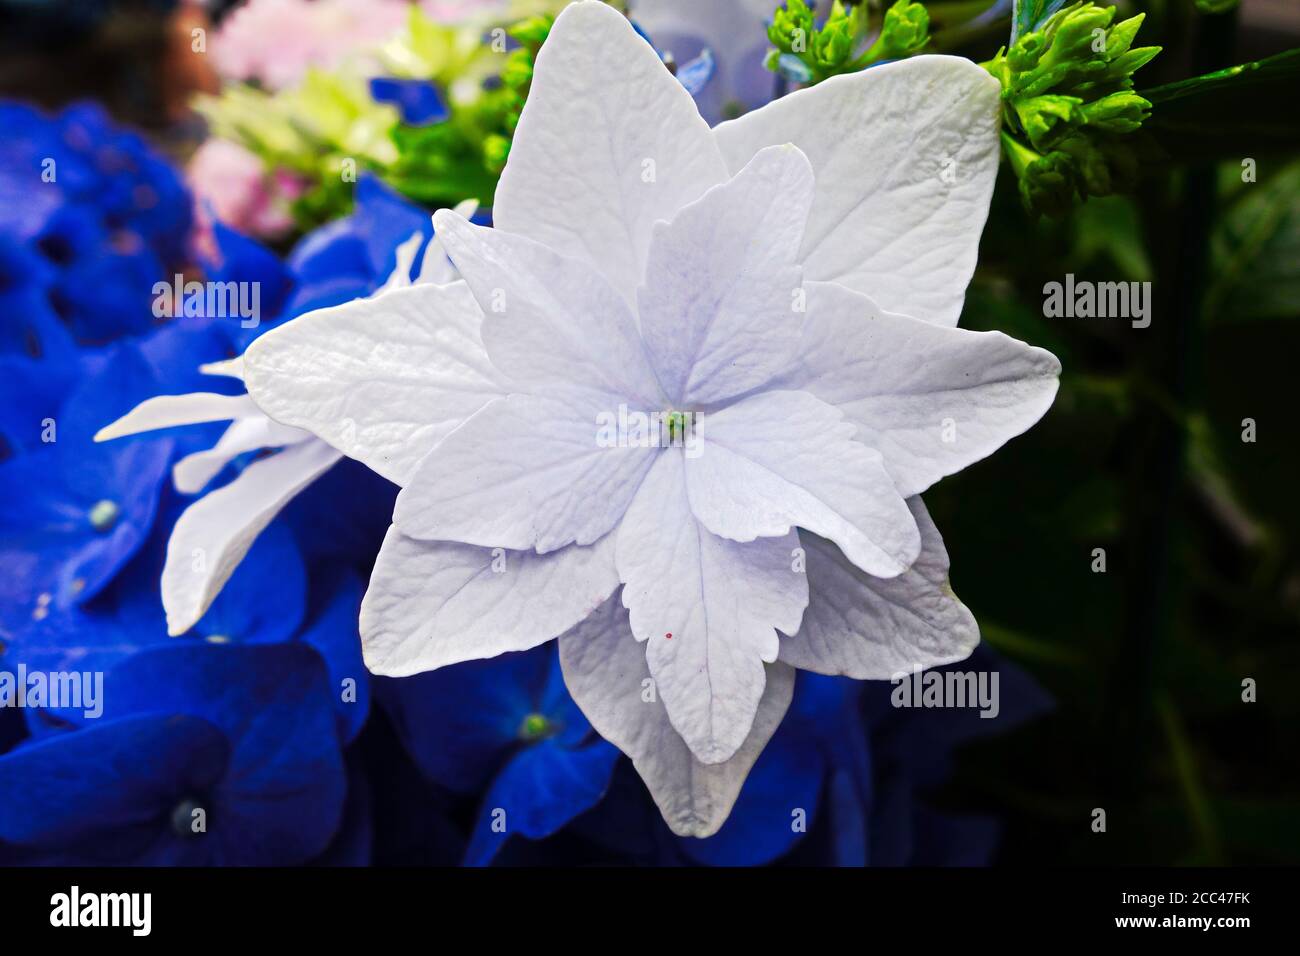 Closeup shot of beautiful white Browallia Stock Photo